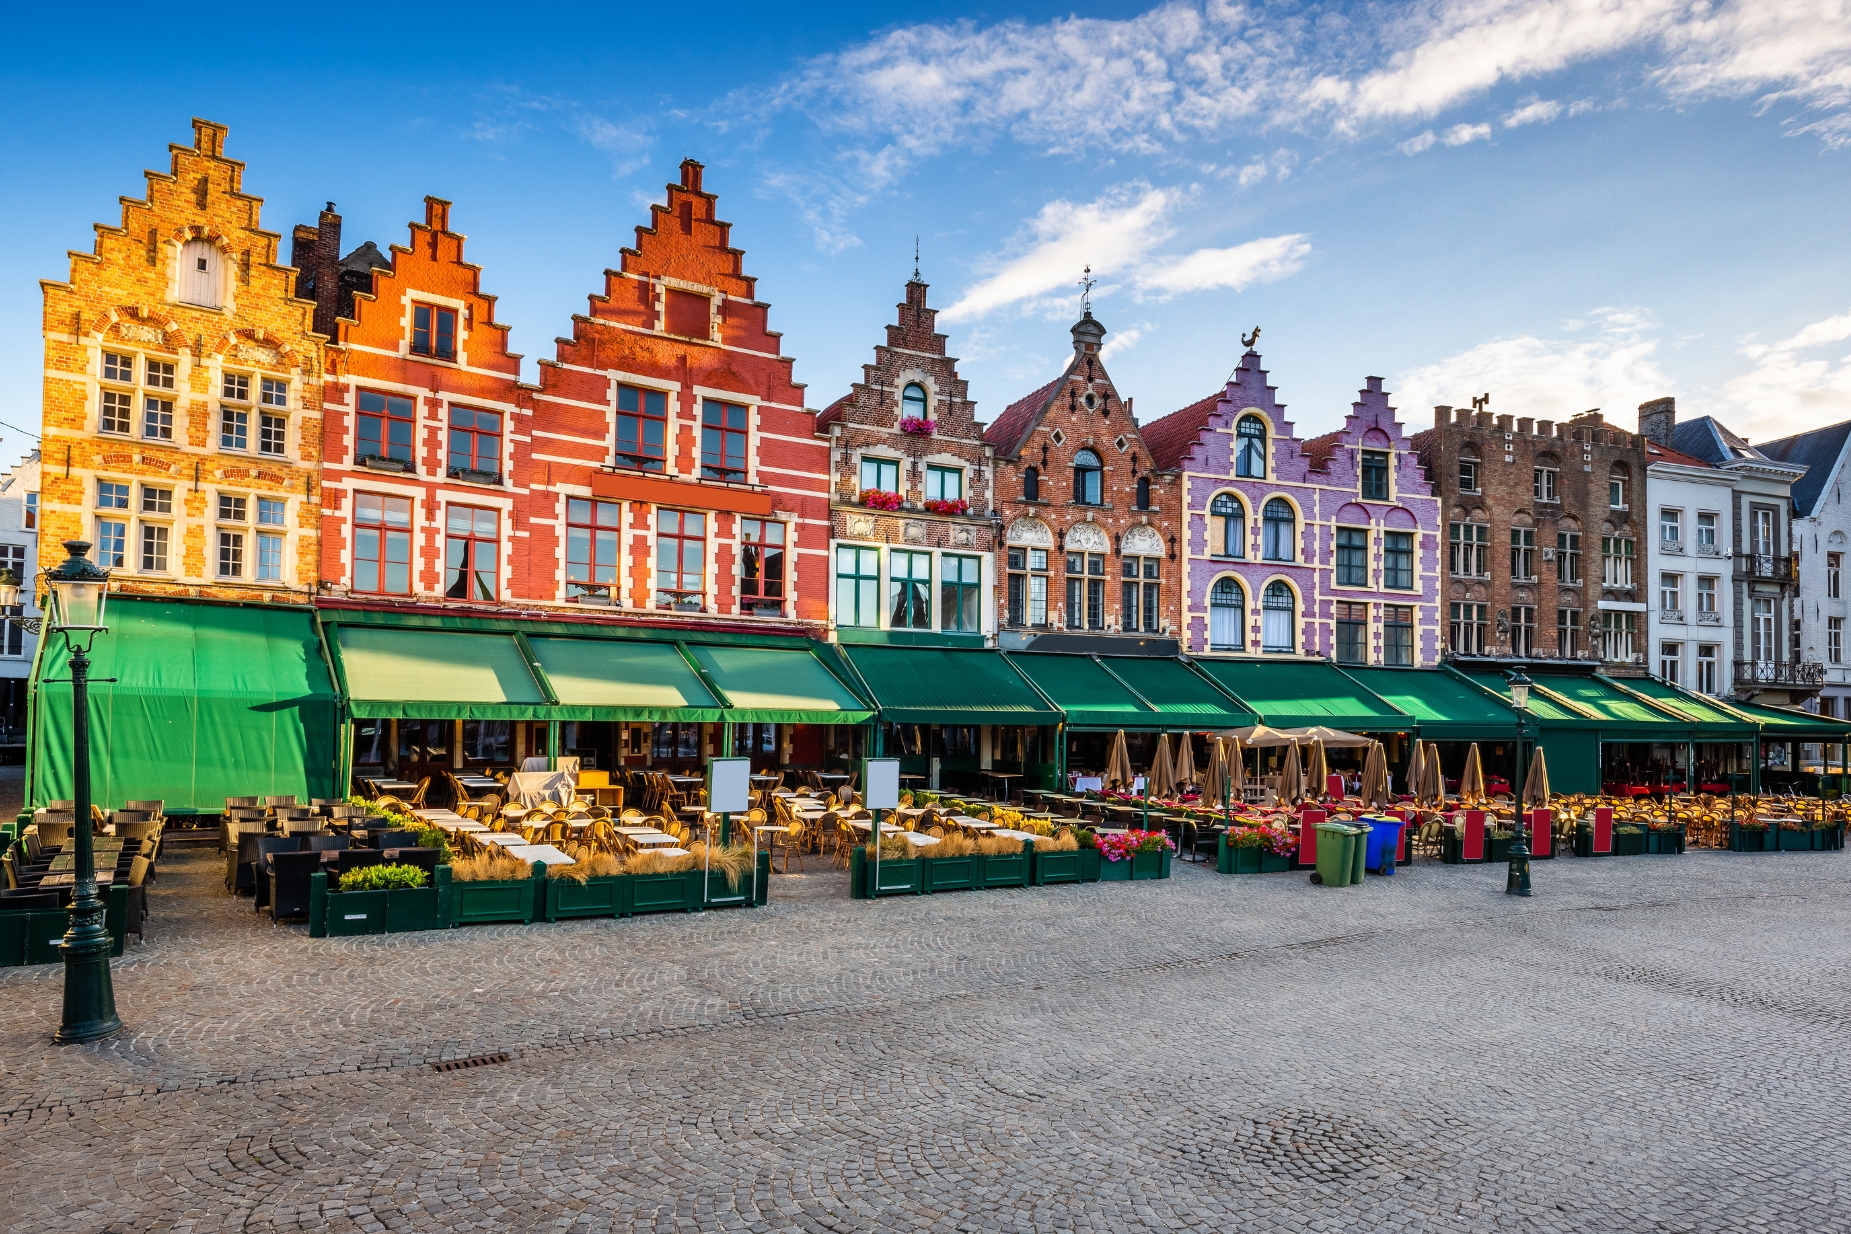 Soaking up culture in Bruges